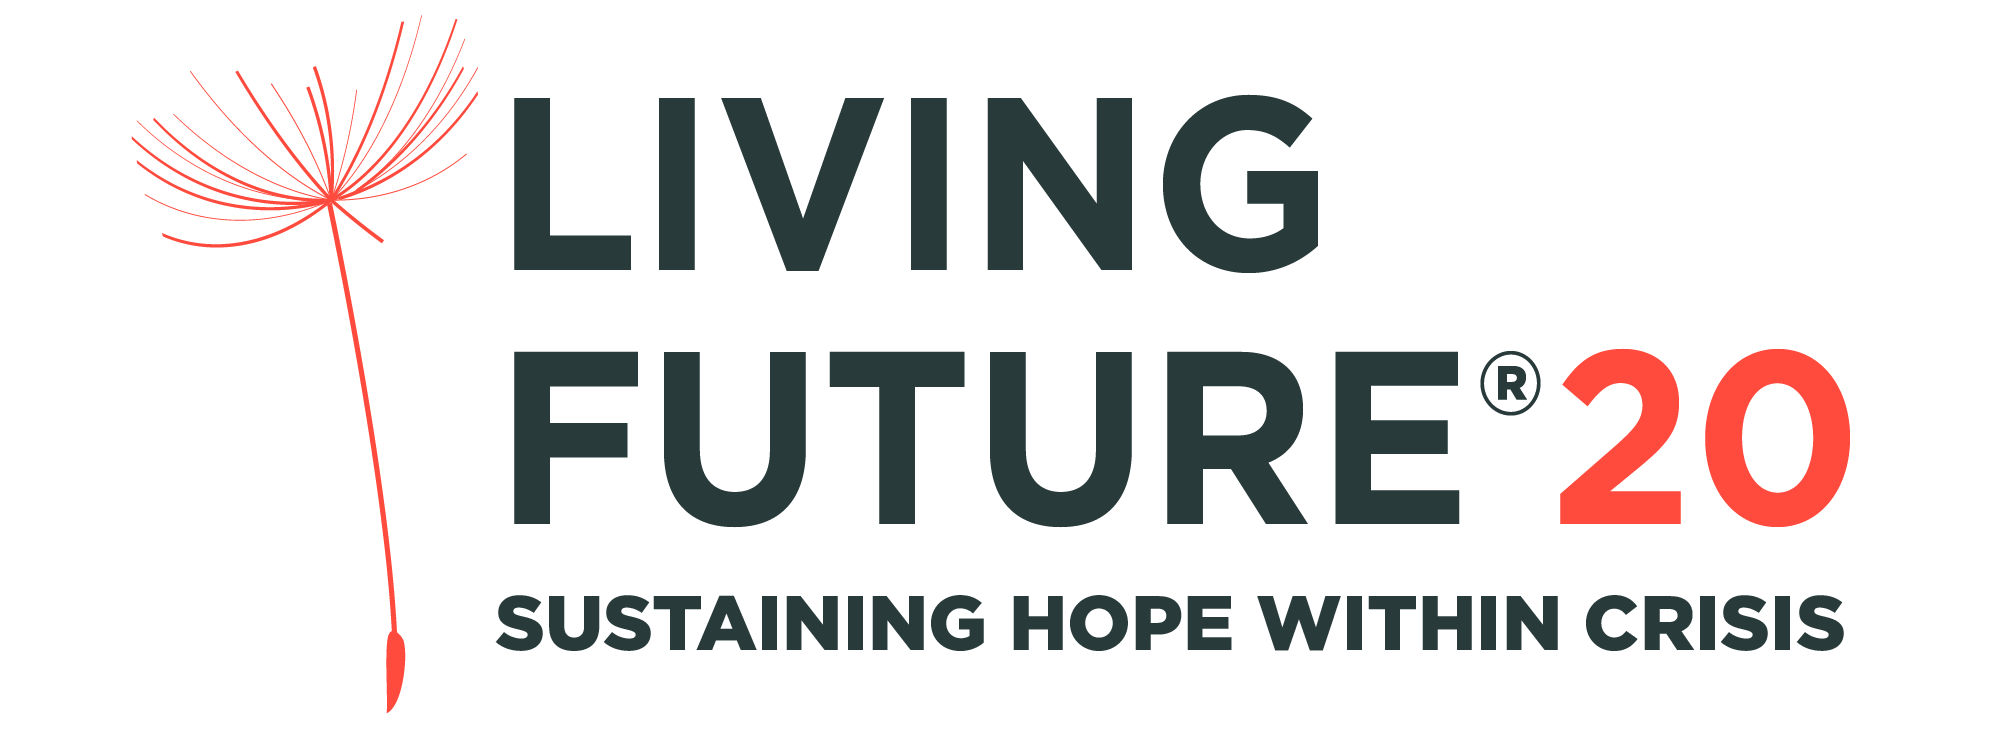 Living Future 20 logo